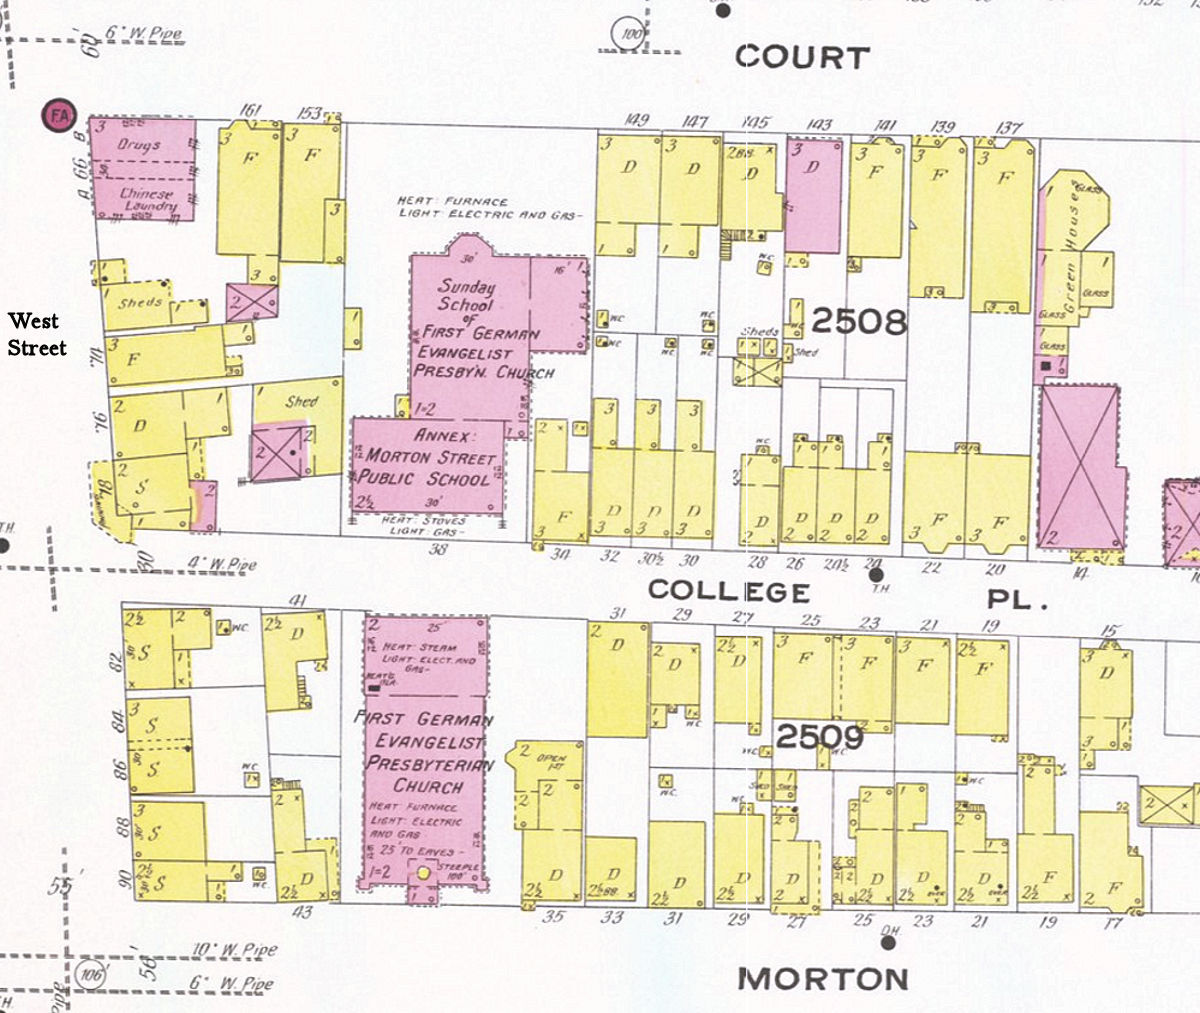 1908 Map
39 Morton Street n. High Street
